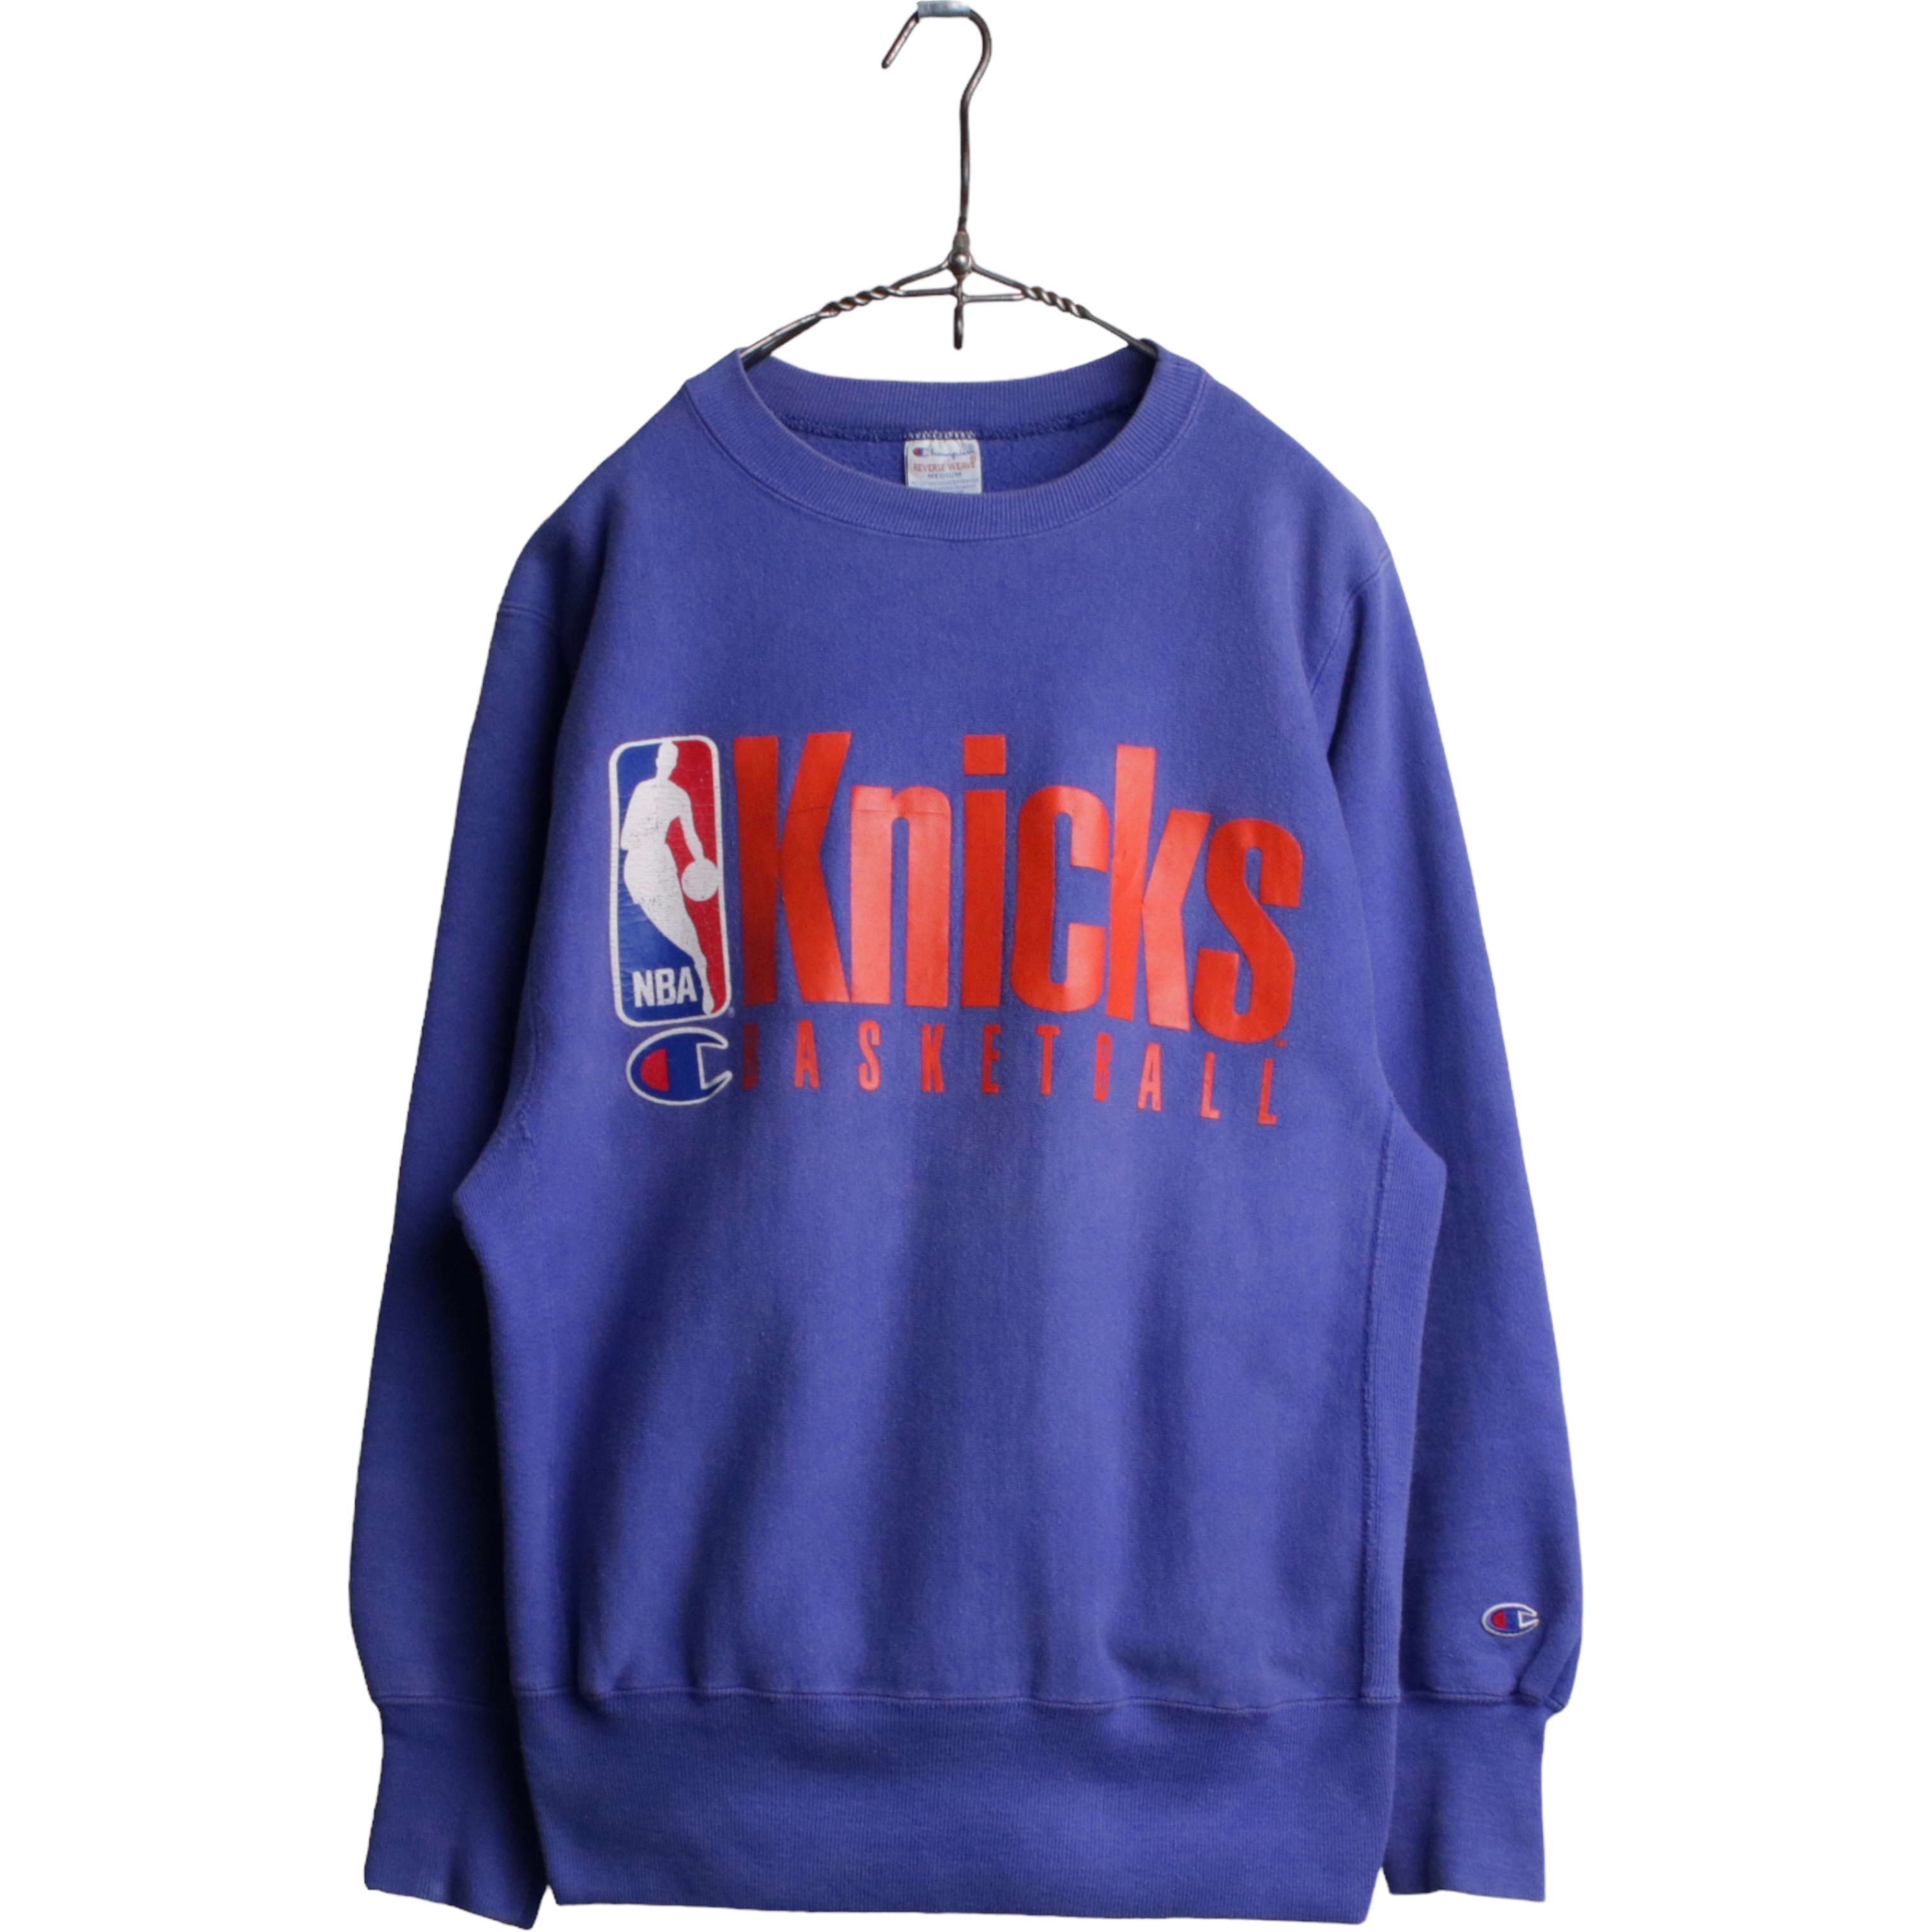 90s USA製 チャンピオン リバースウィーブ NBA Knicks 後染め - スウェット